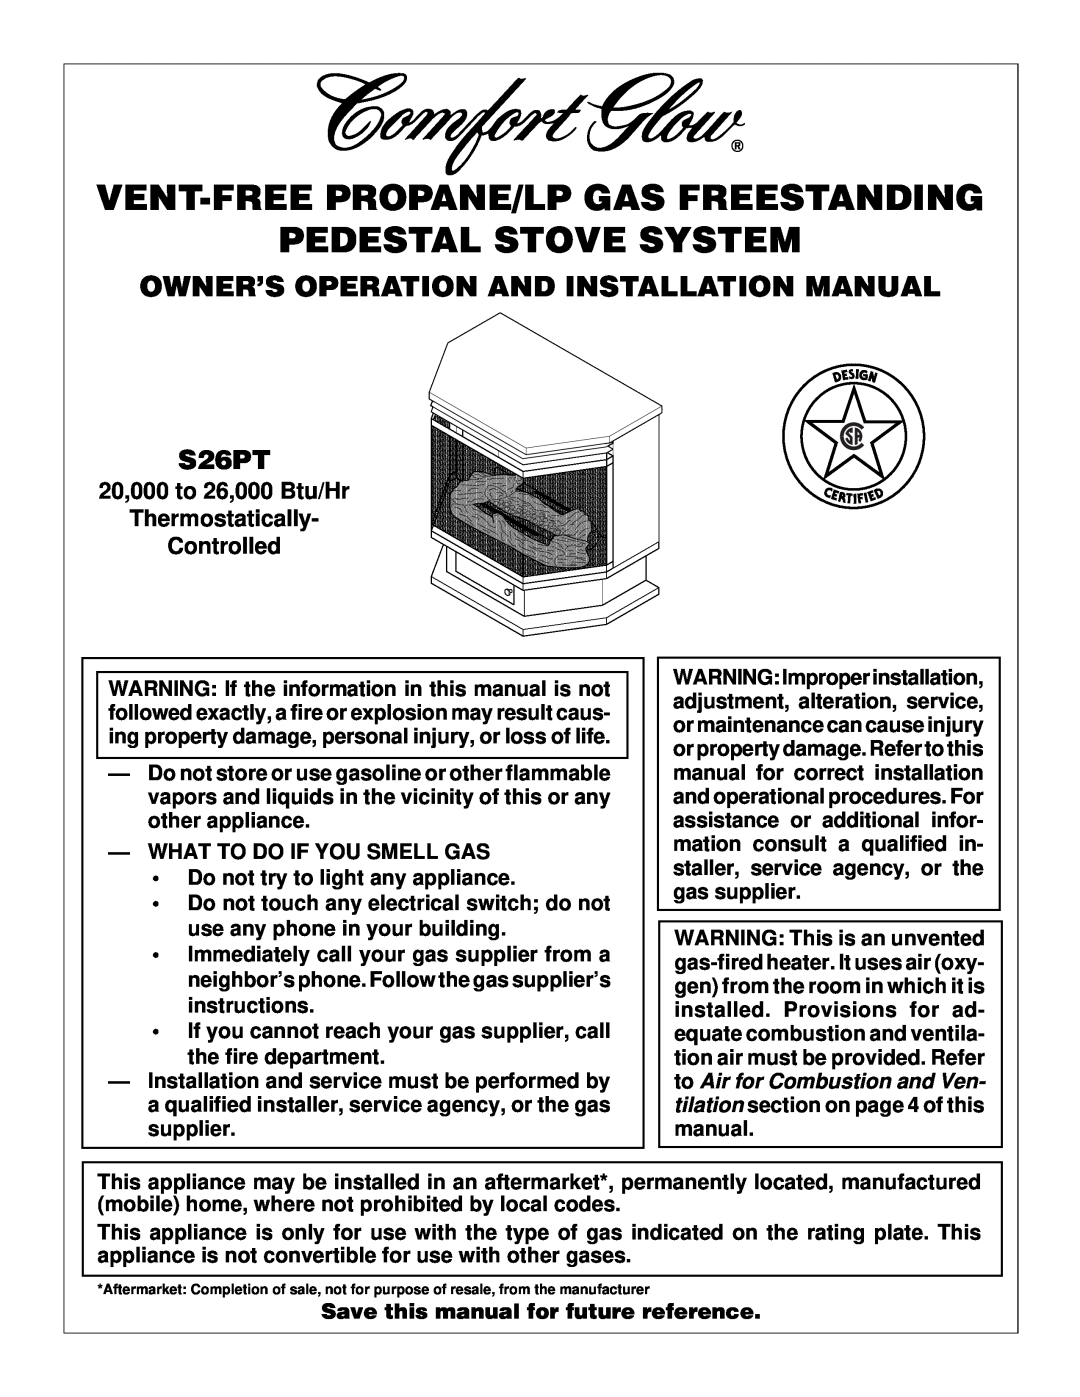 Desa Tech S26PT installation manual Vent-Free Propane/Lp Gas Freestanding Pedestal Stove System 